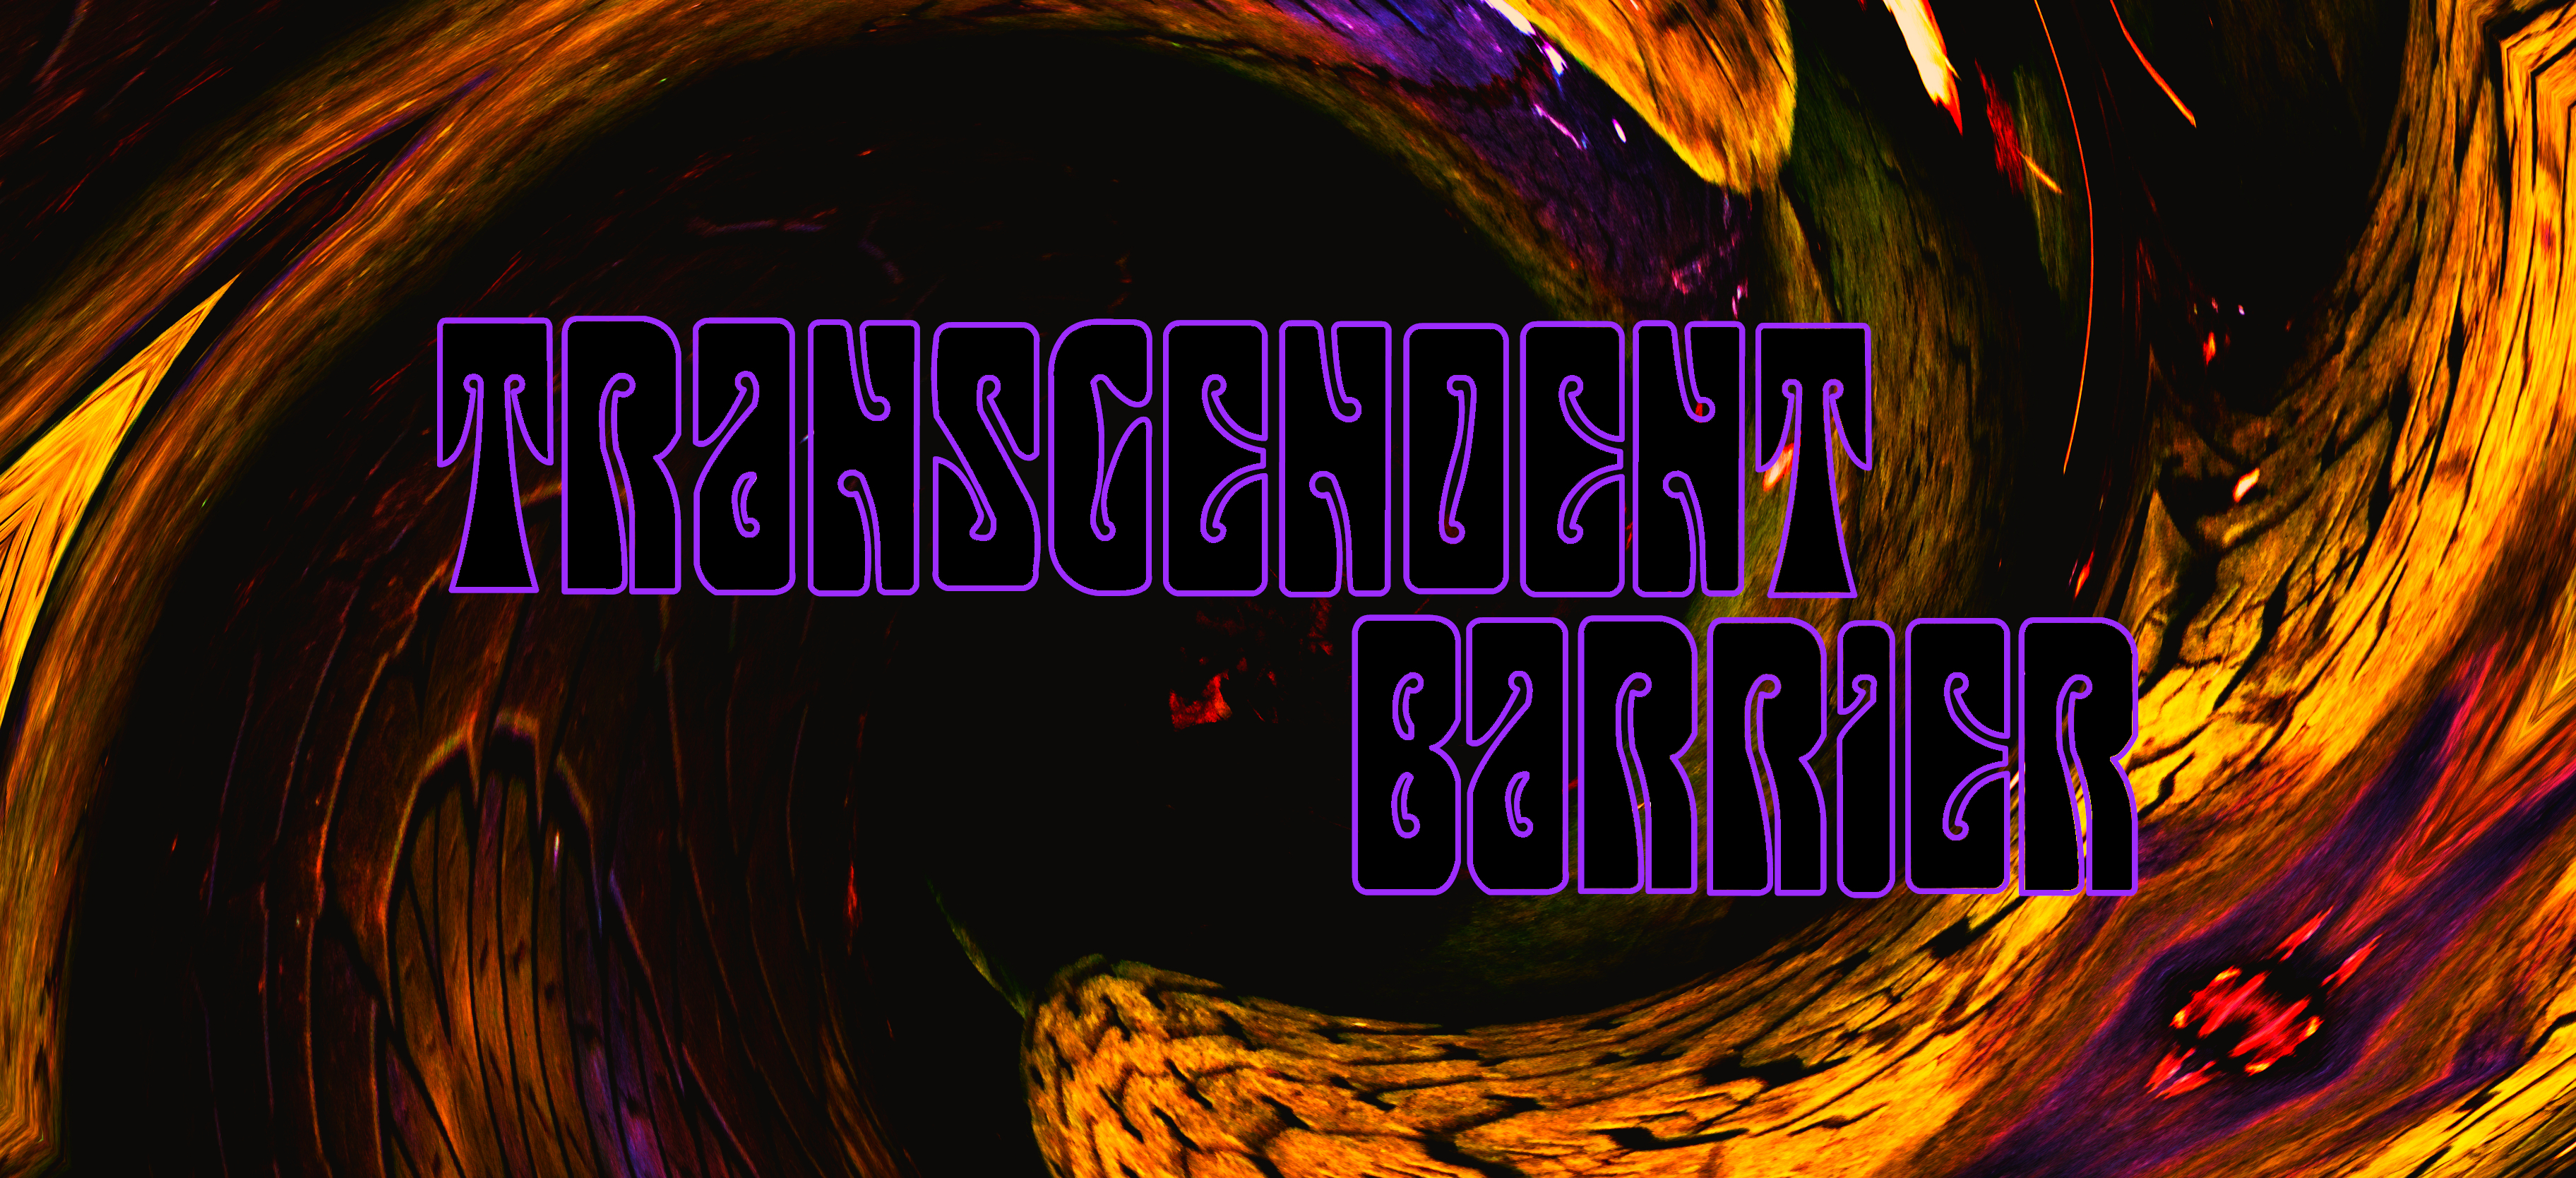 ♫ Transcendent Barrier